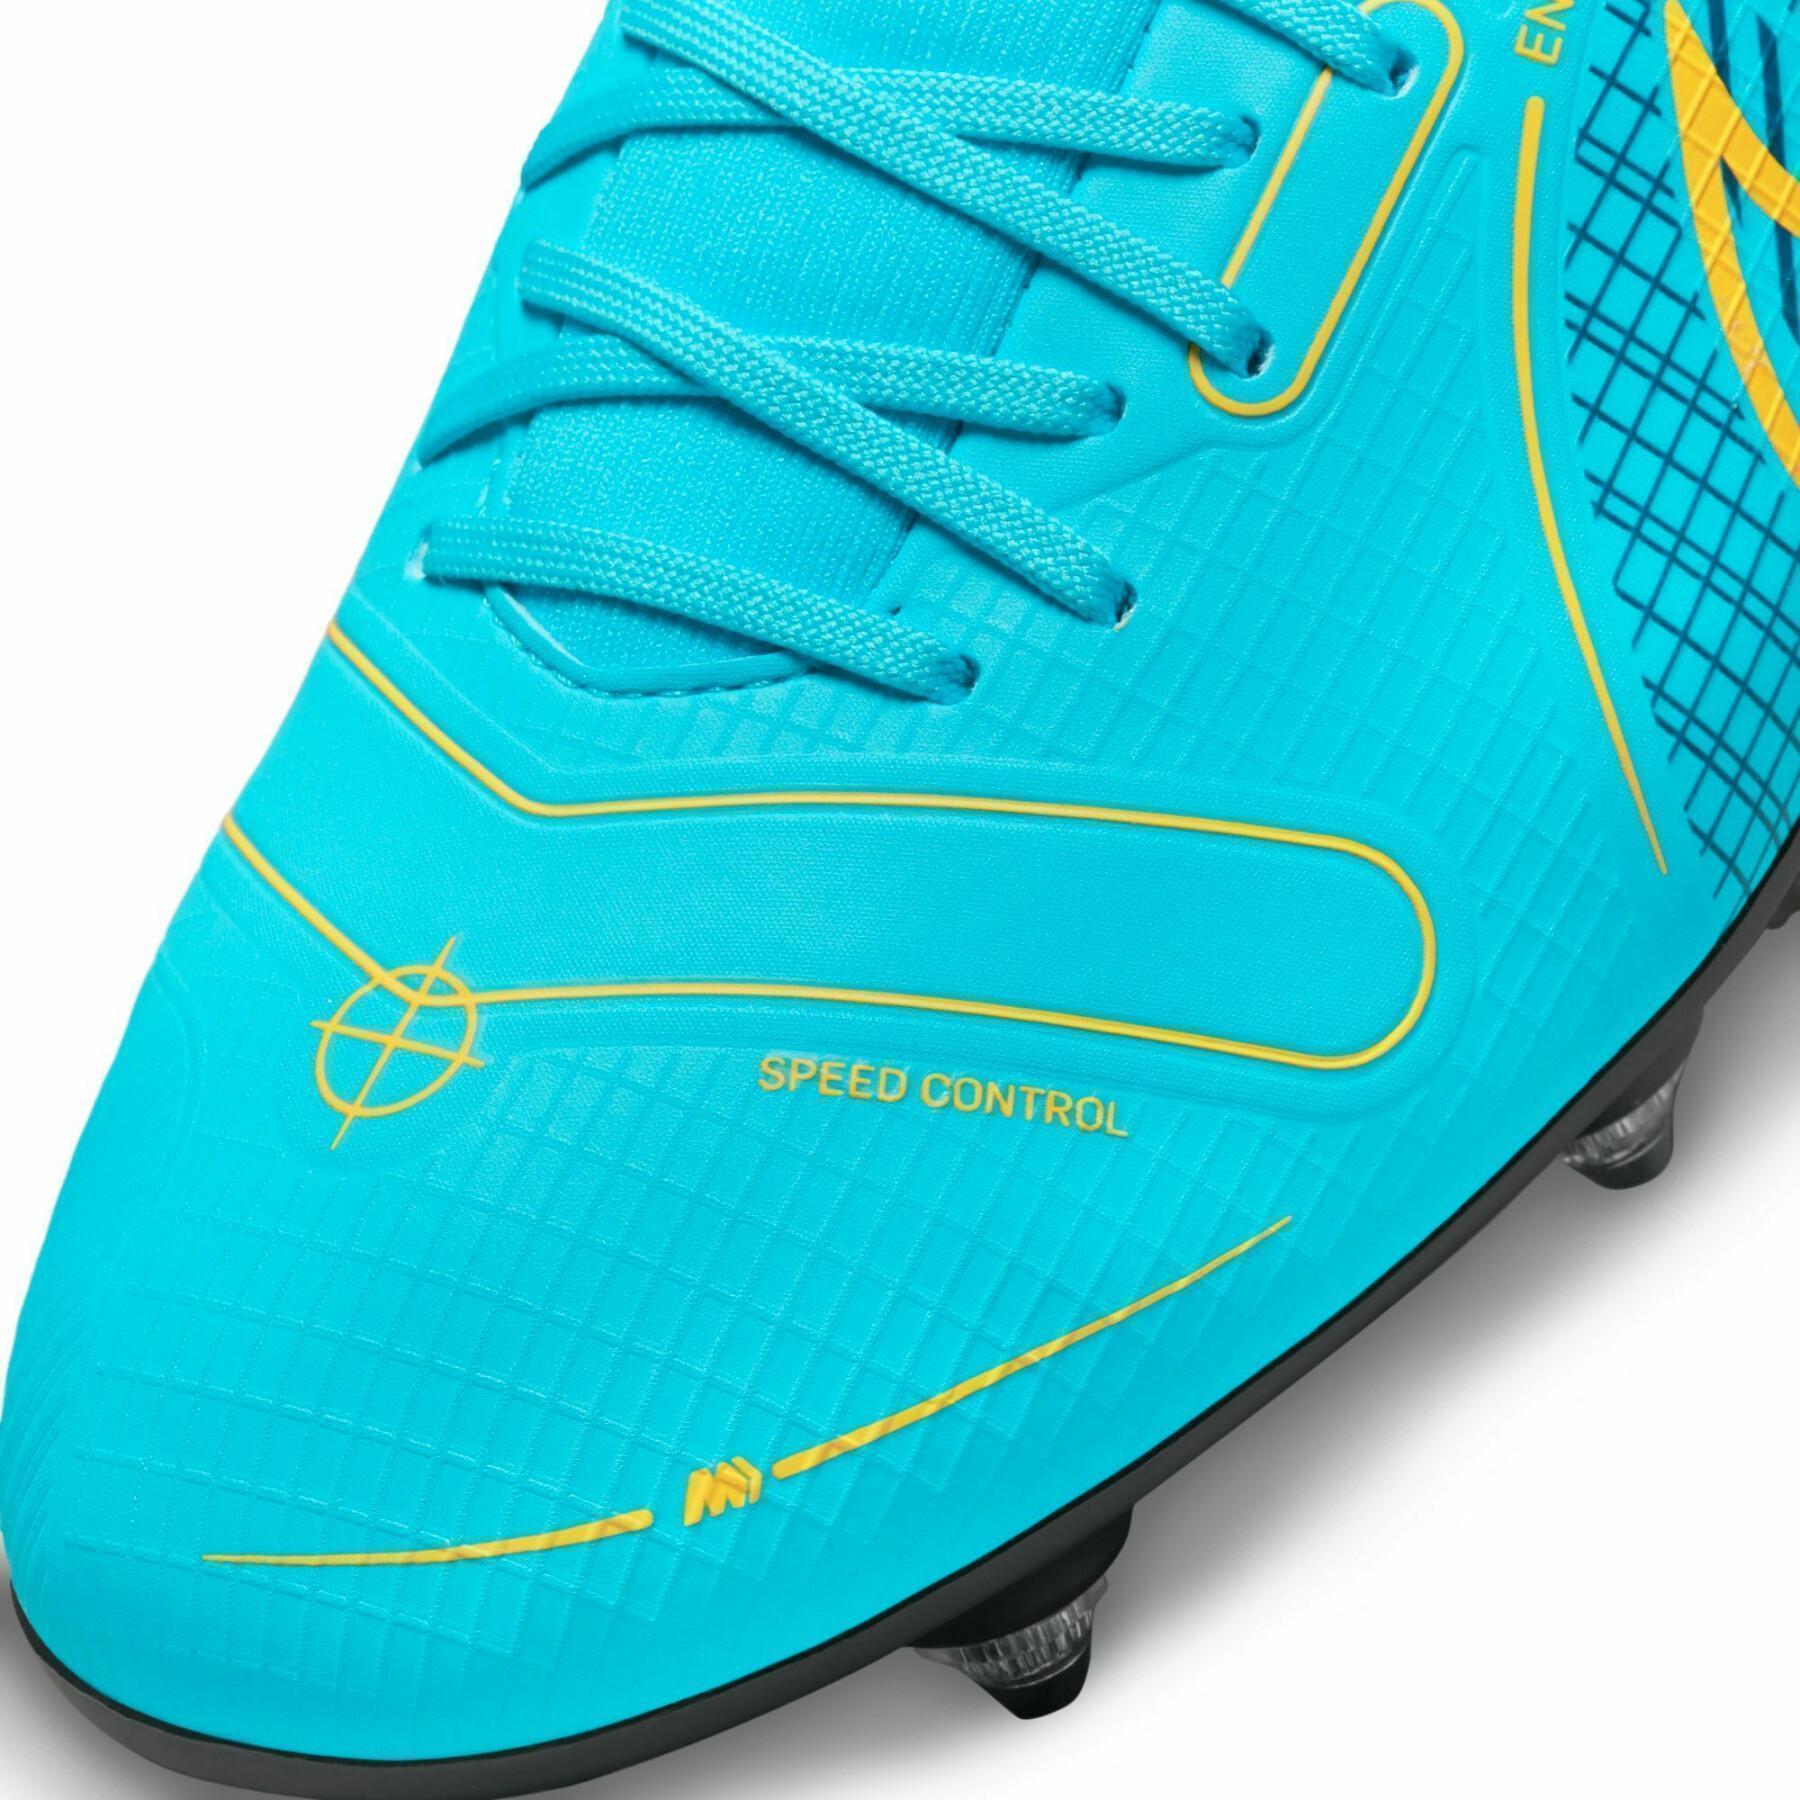 Chaussures de football Nike Mercurial Superfly 8 Academy SG-PRO -Blueprint Pack